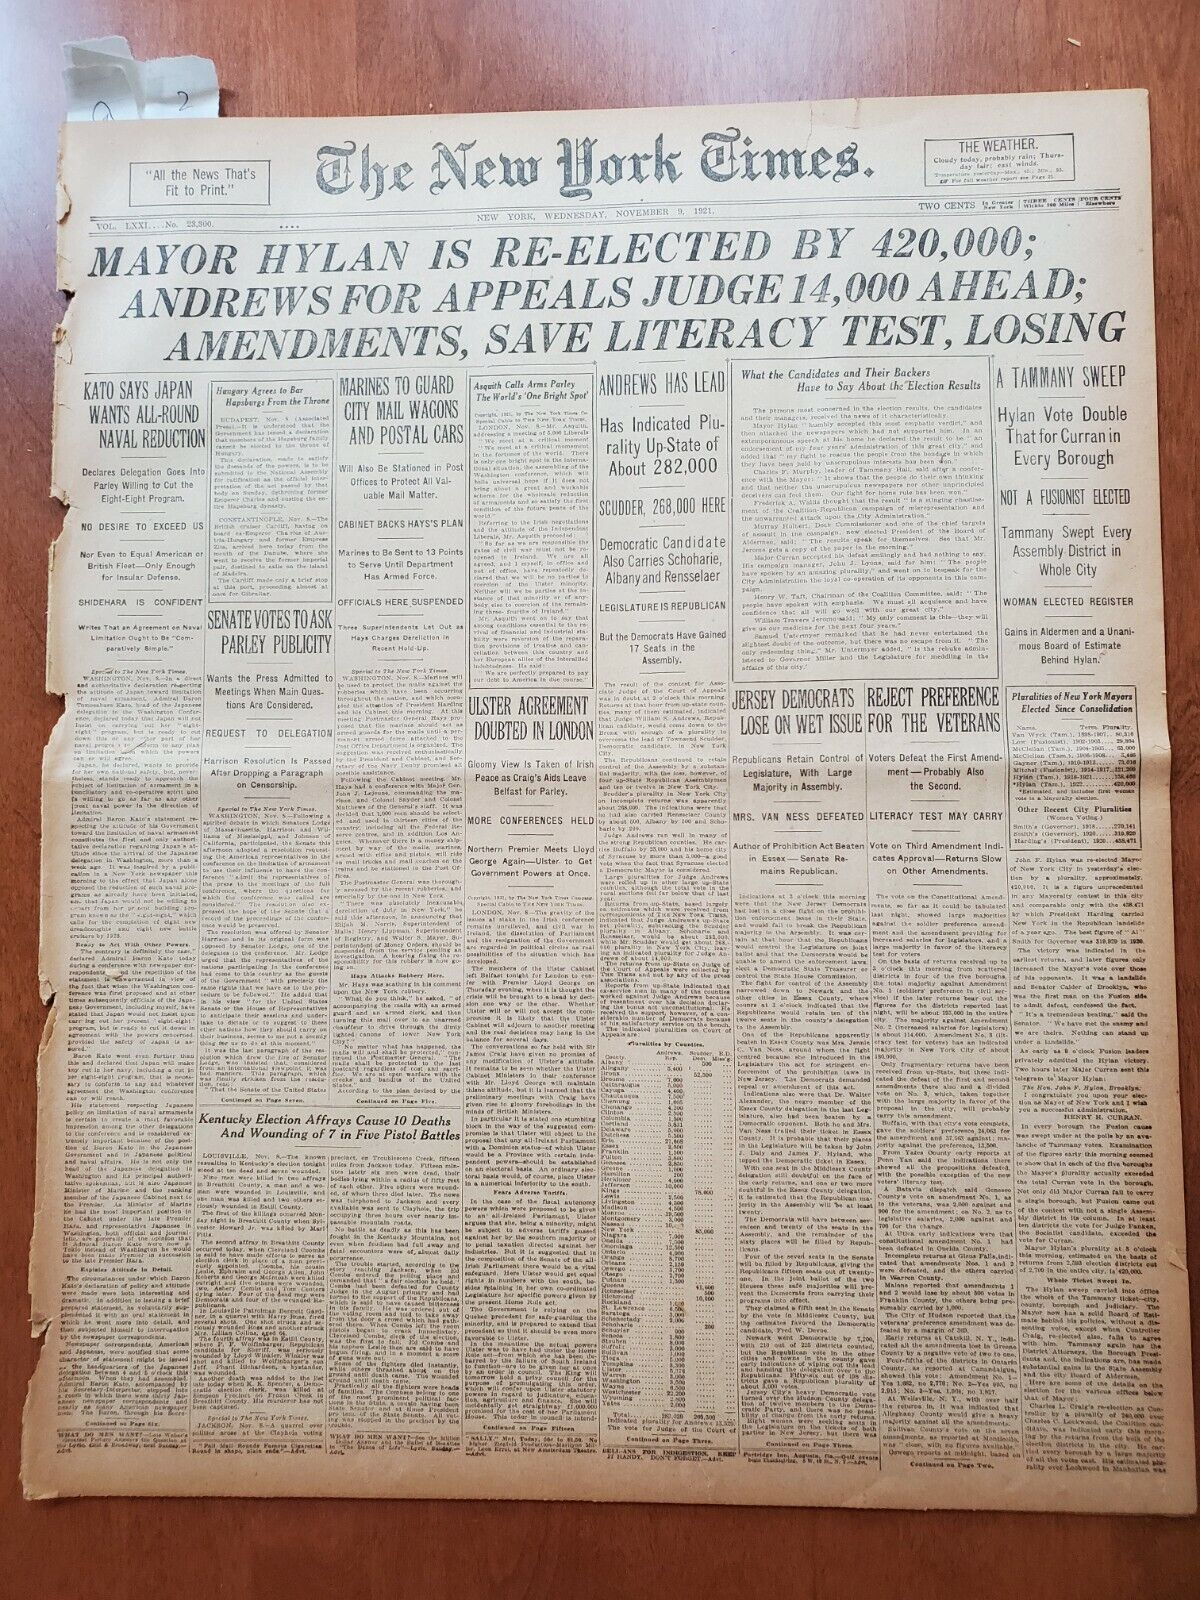 1921 NOVEMBER 9 NEW YORK TIMES NEWSPAPER - MAYOR HYLAN IS RE-ELECTED - NT 8020